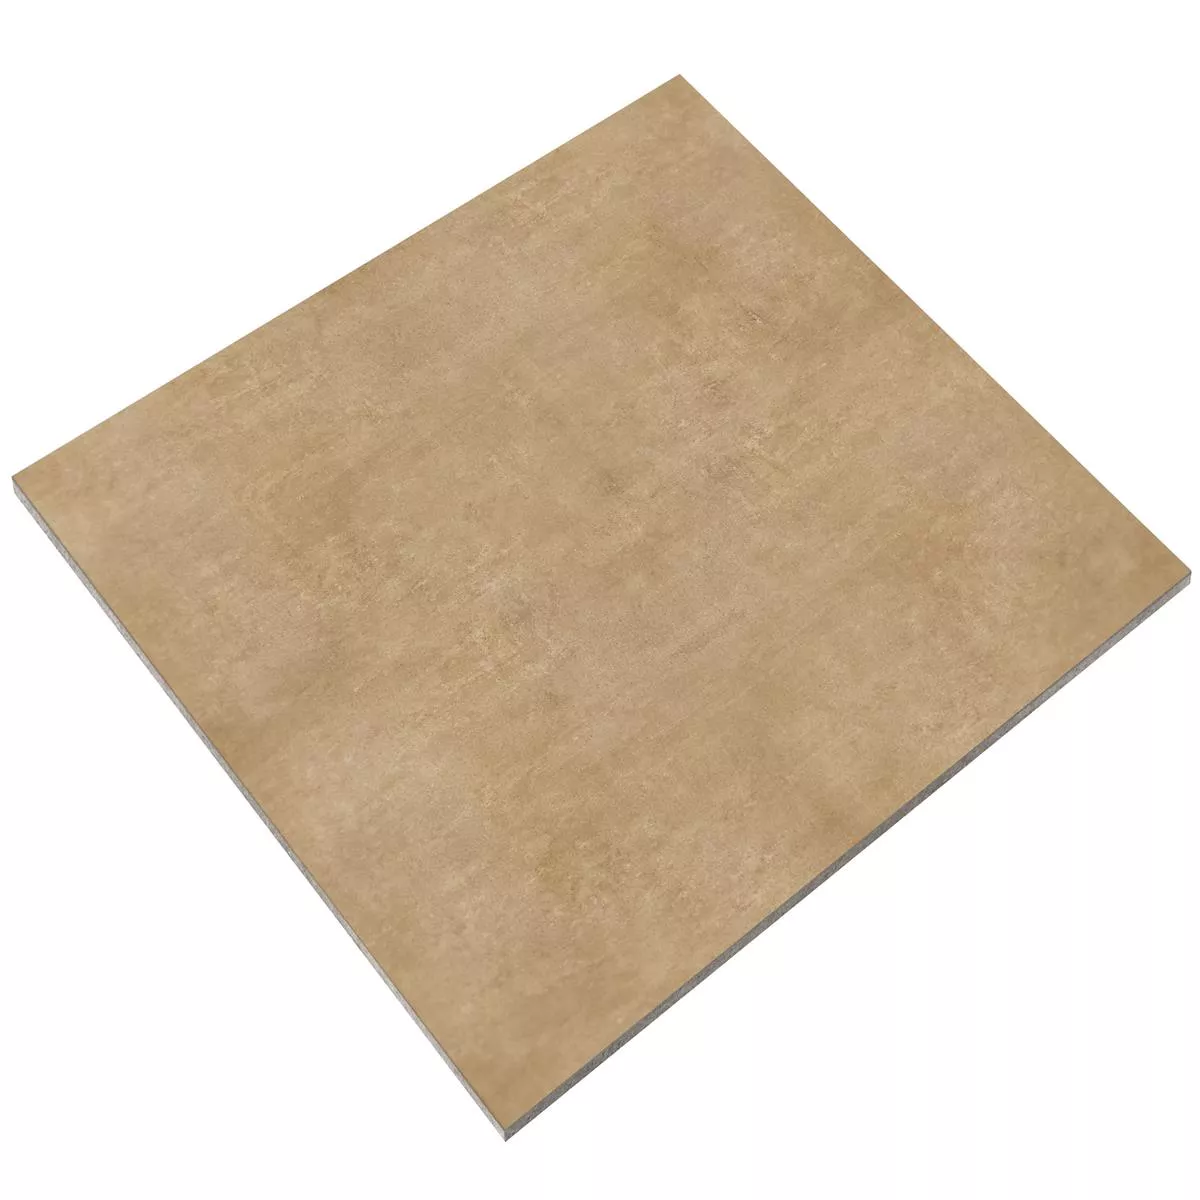 Sample Floor Tiles Cairo Taupe 100x100x0,6cm